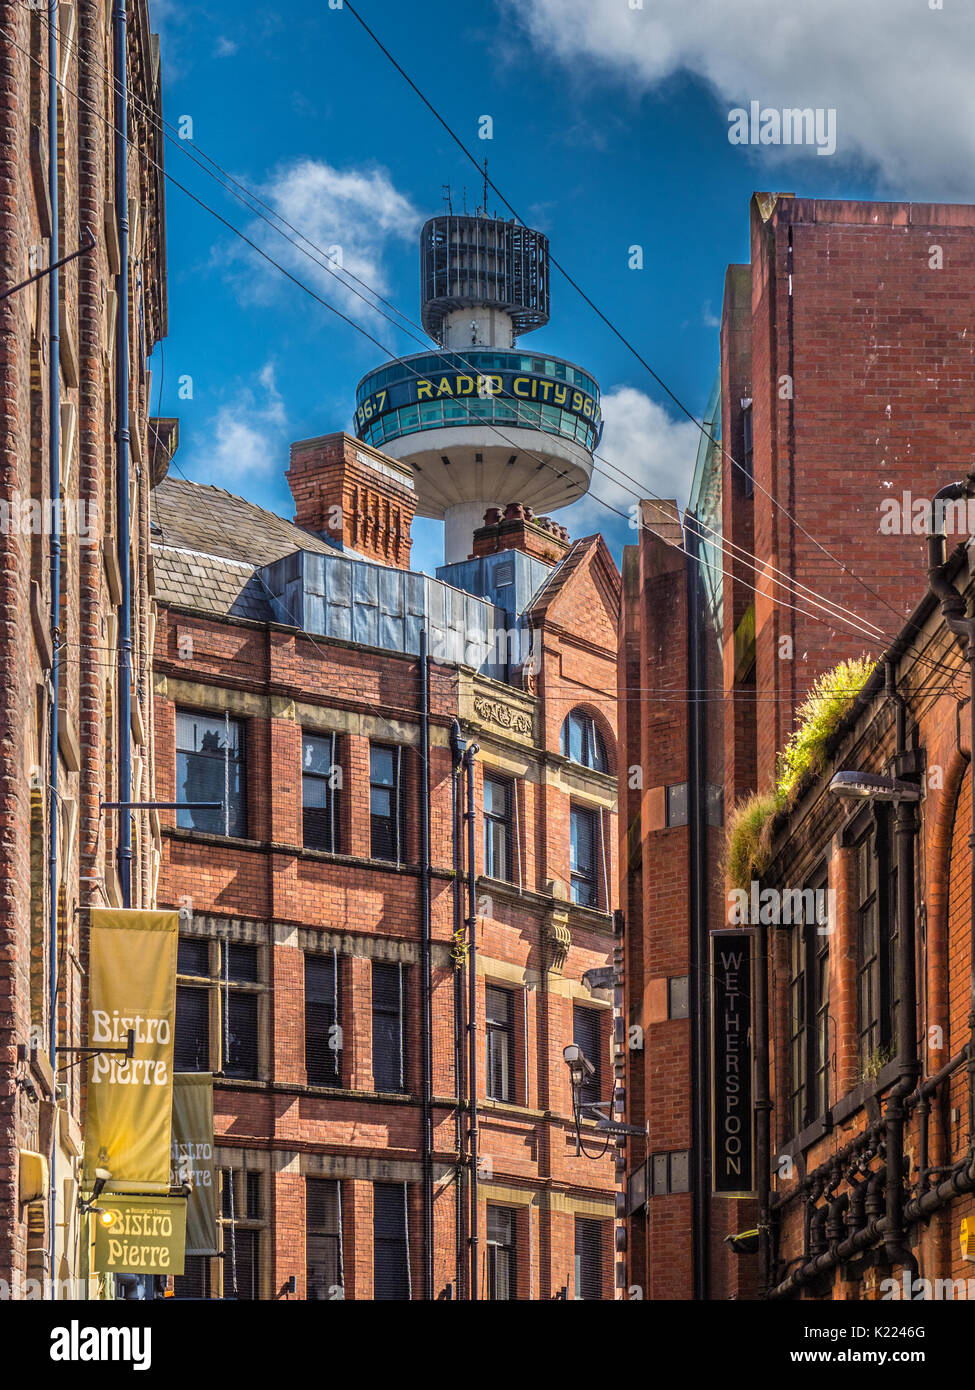 Radio City Tower, from Mathew Street, Liverpool, England, UK Stock Photo